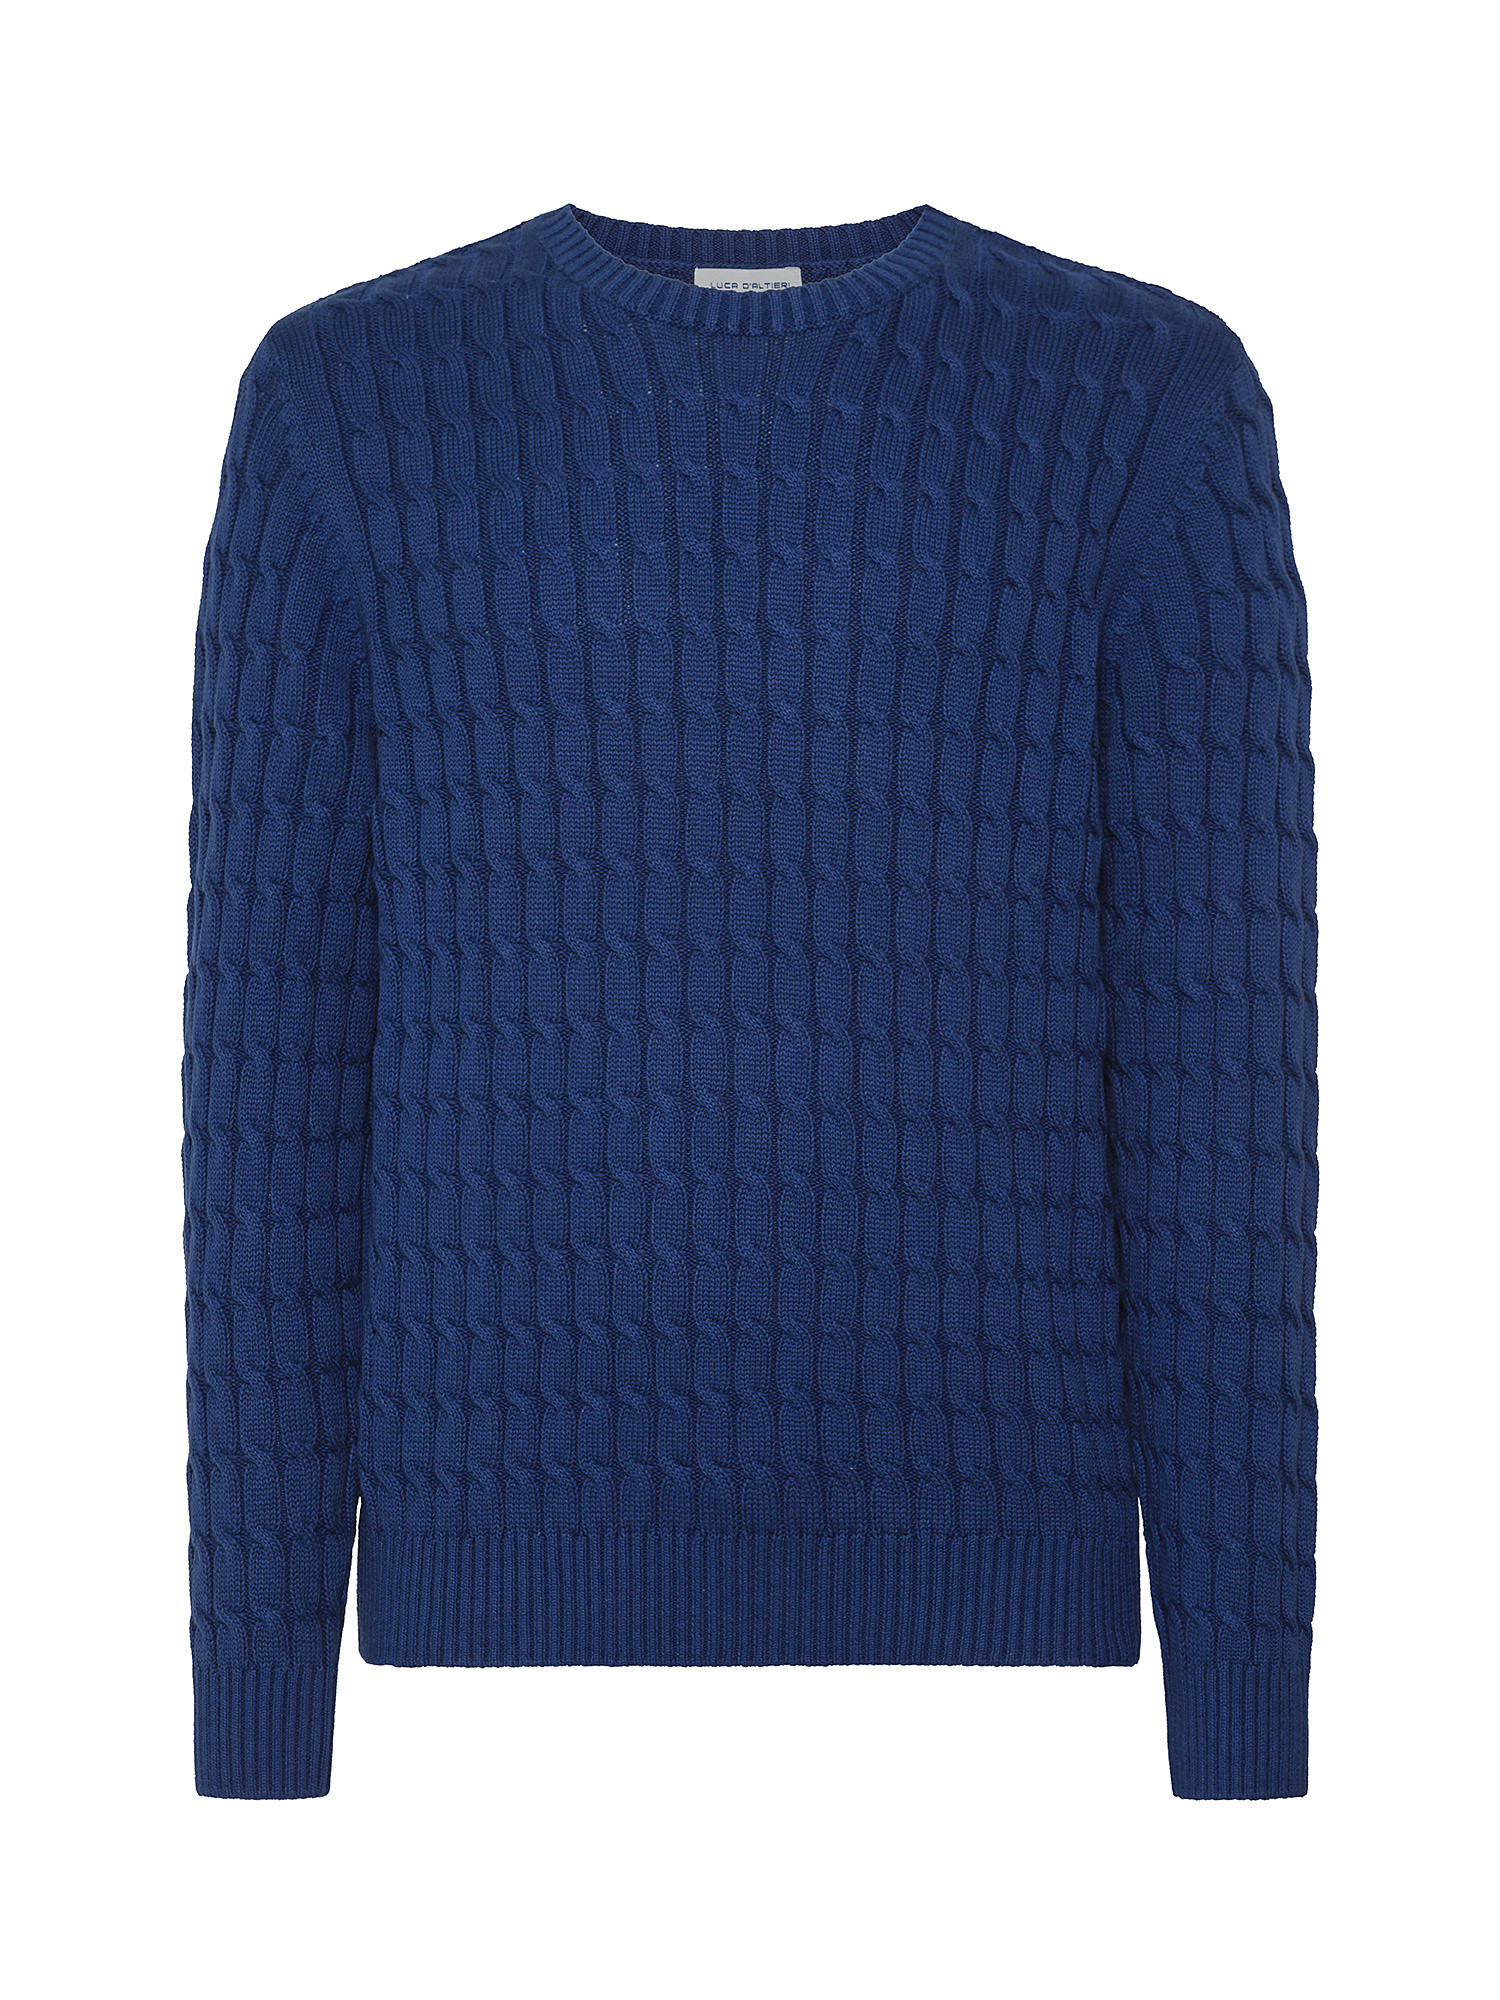 Luca D'Altieri - Crewneck sweater with pure cotton braids, Blue, large image number 0